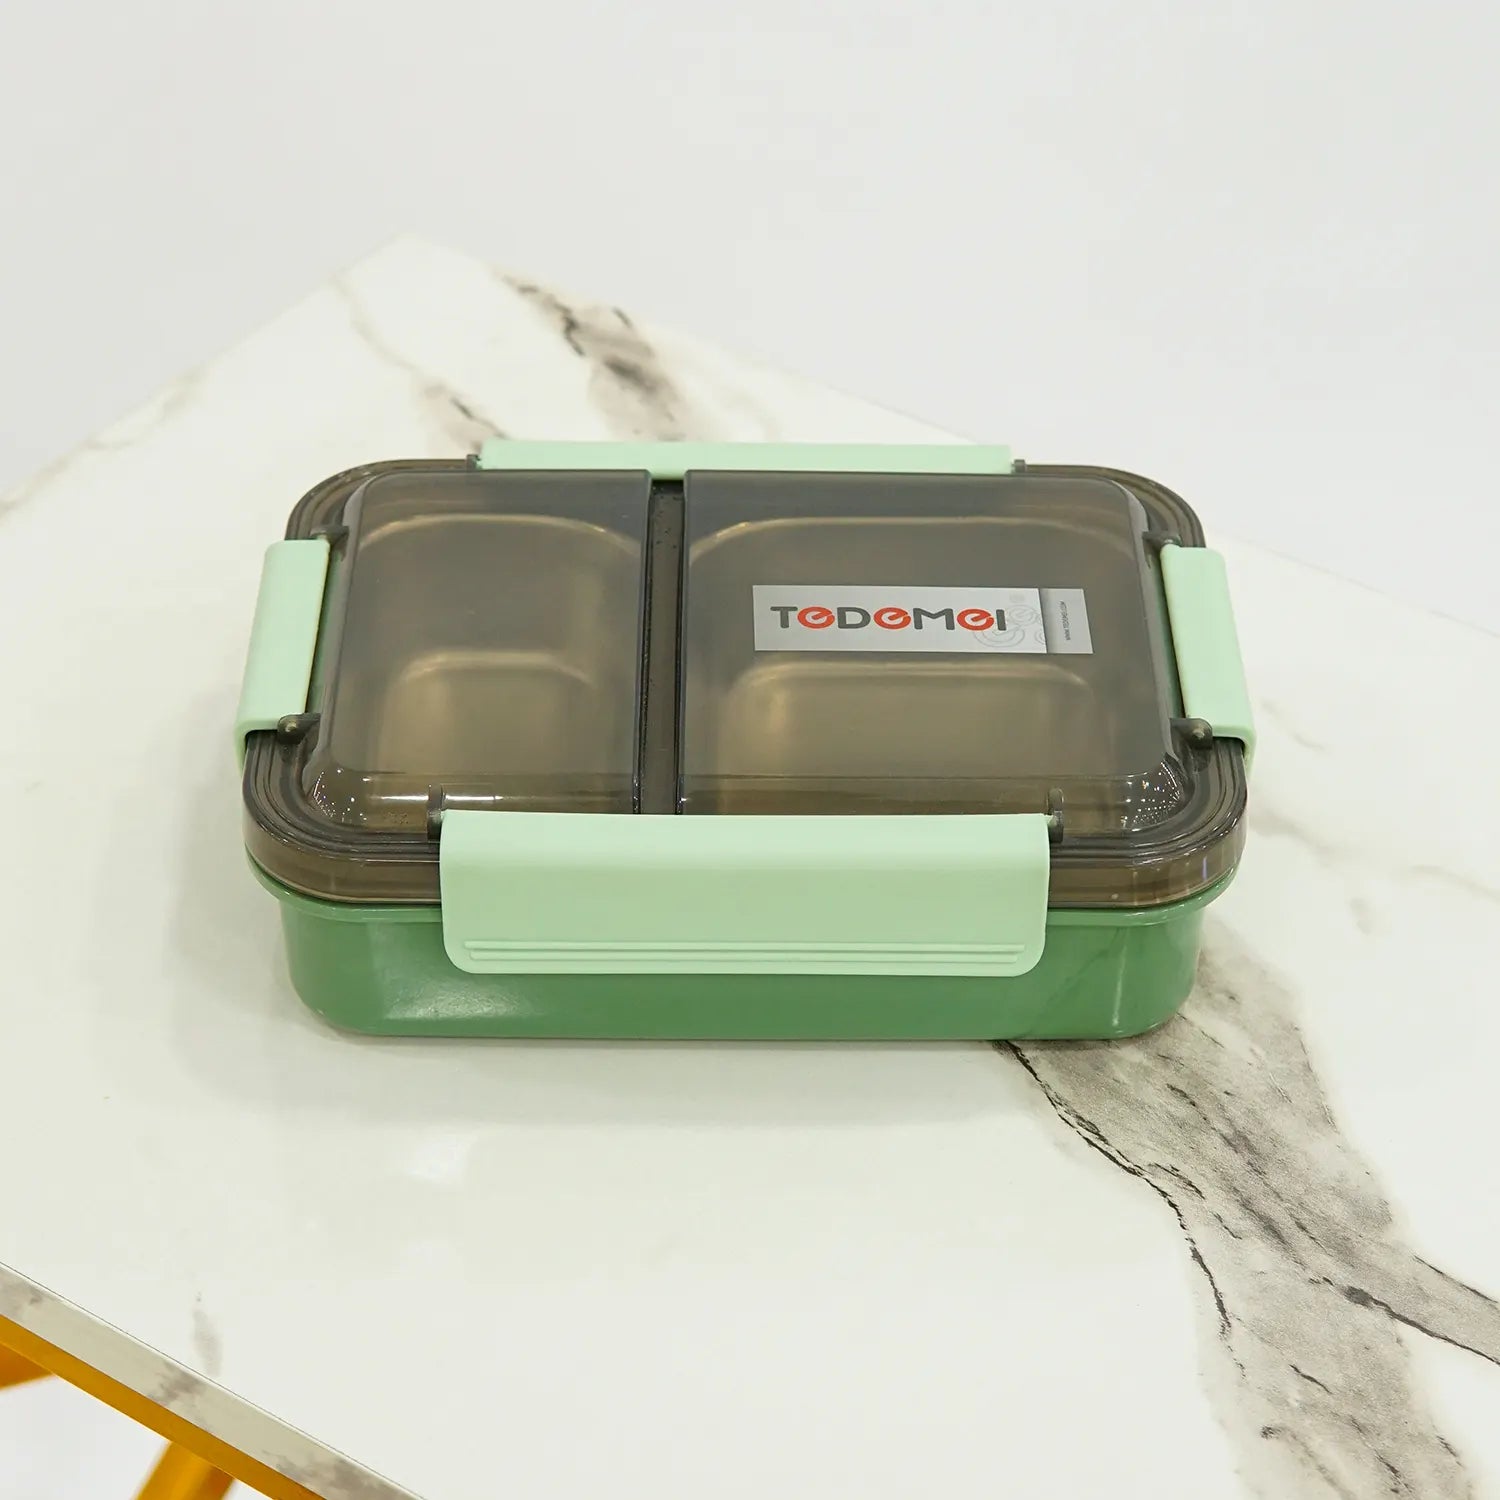 School Days Delight: High-Quality Food-Grade Plastic Lunch Box